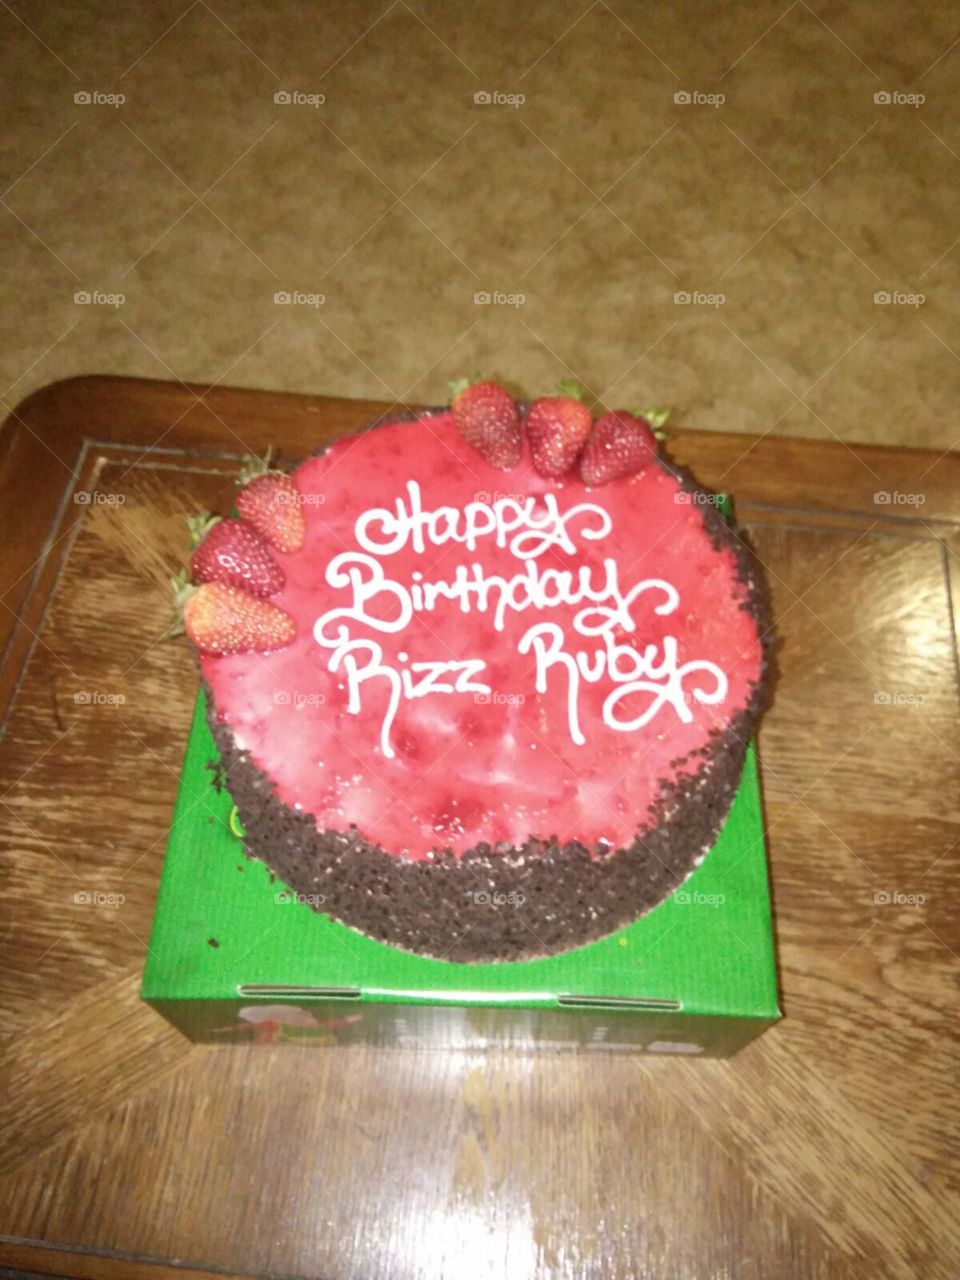 it's very nice tasty and beautiful cake for birthday my mom .